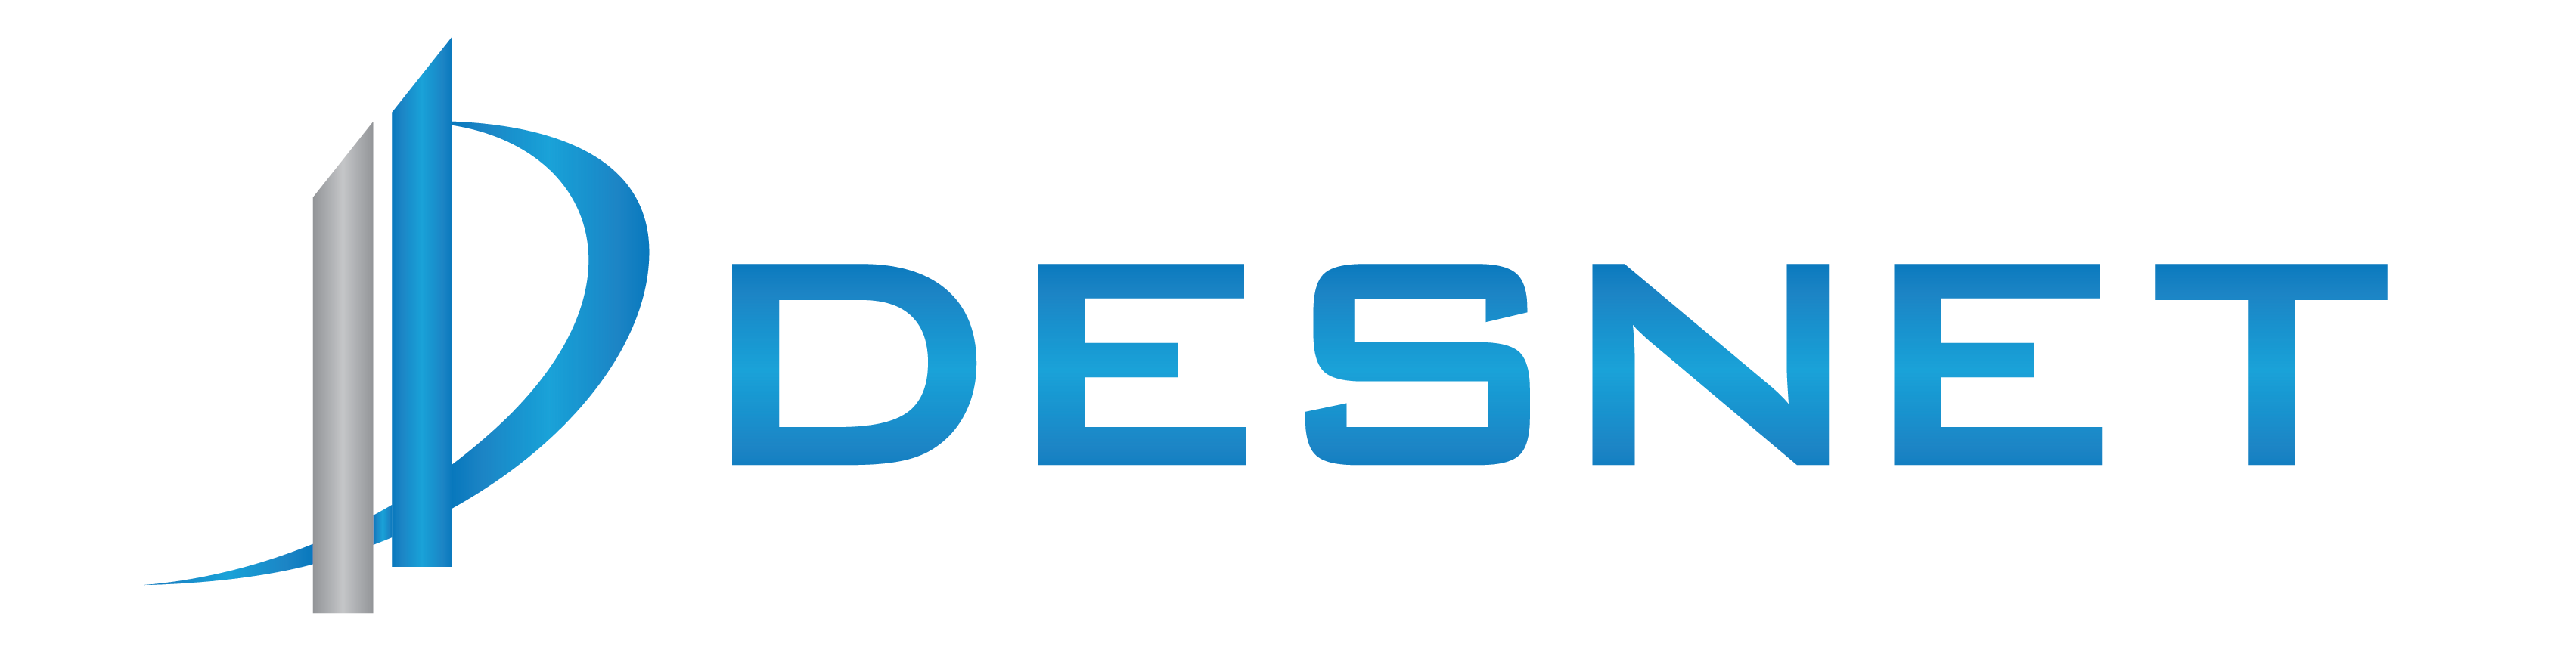 desnet-logo-neu-mobil